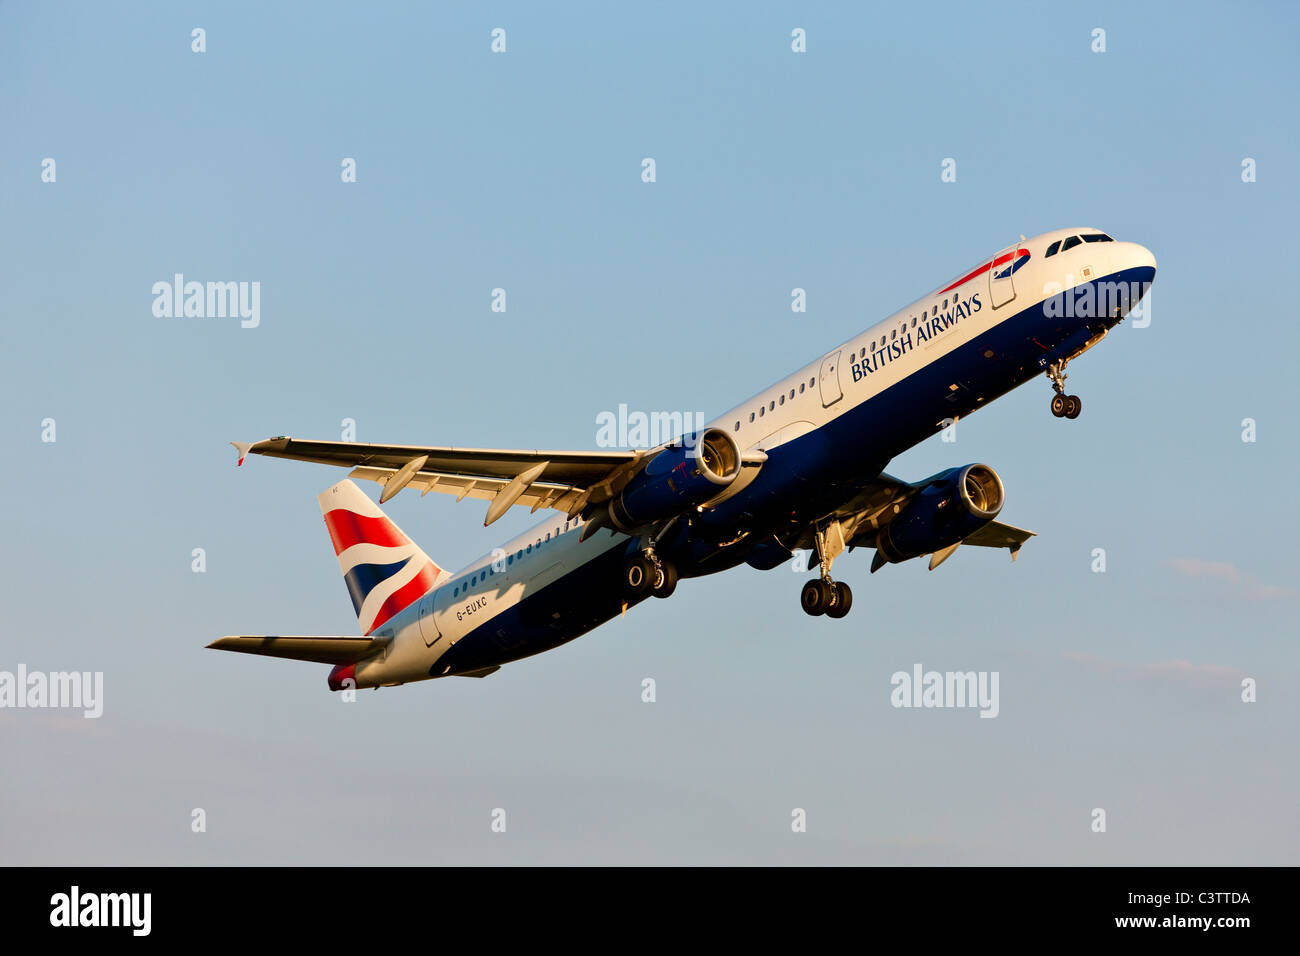 Flight British Airways ( Airbus A 321 ) taking off Stock Photo